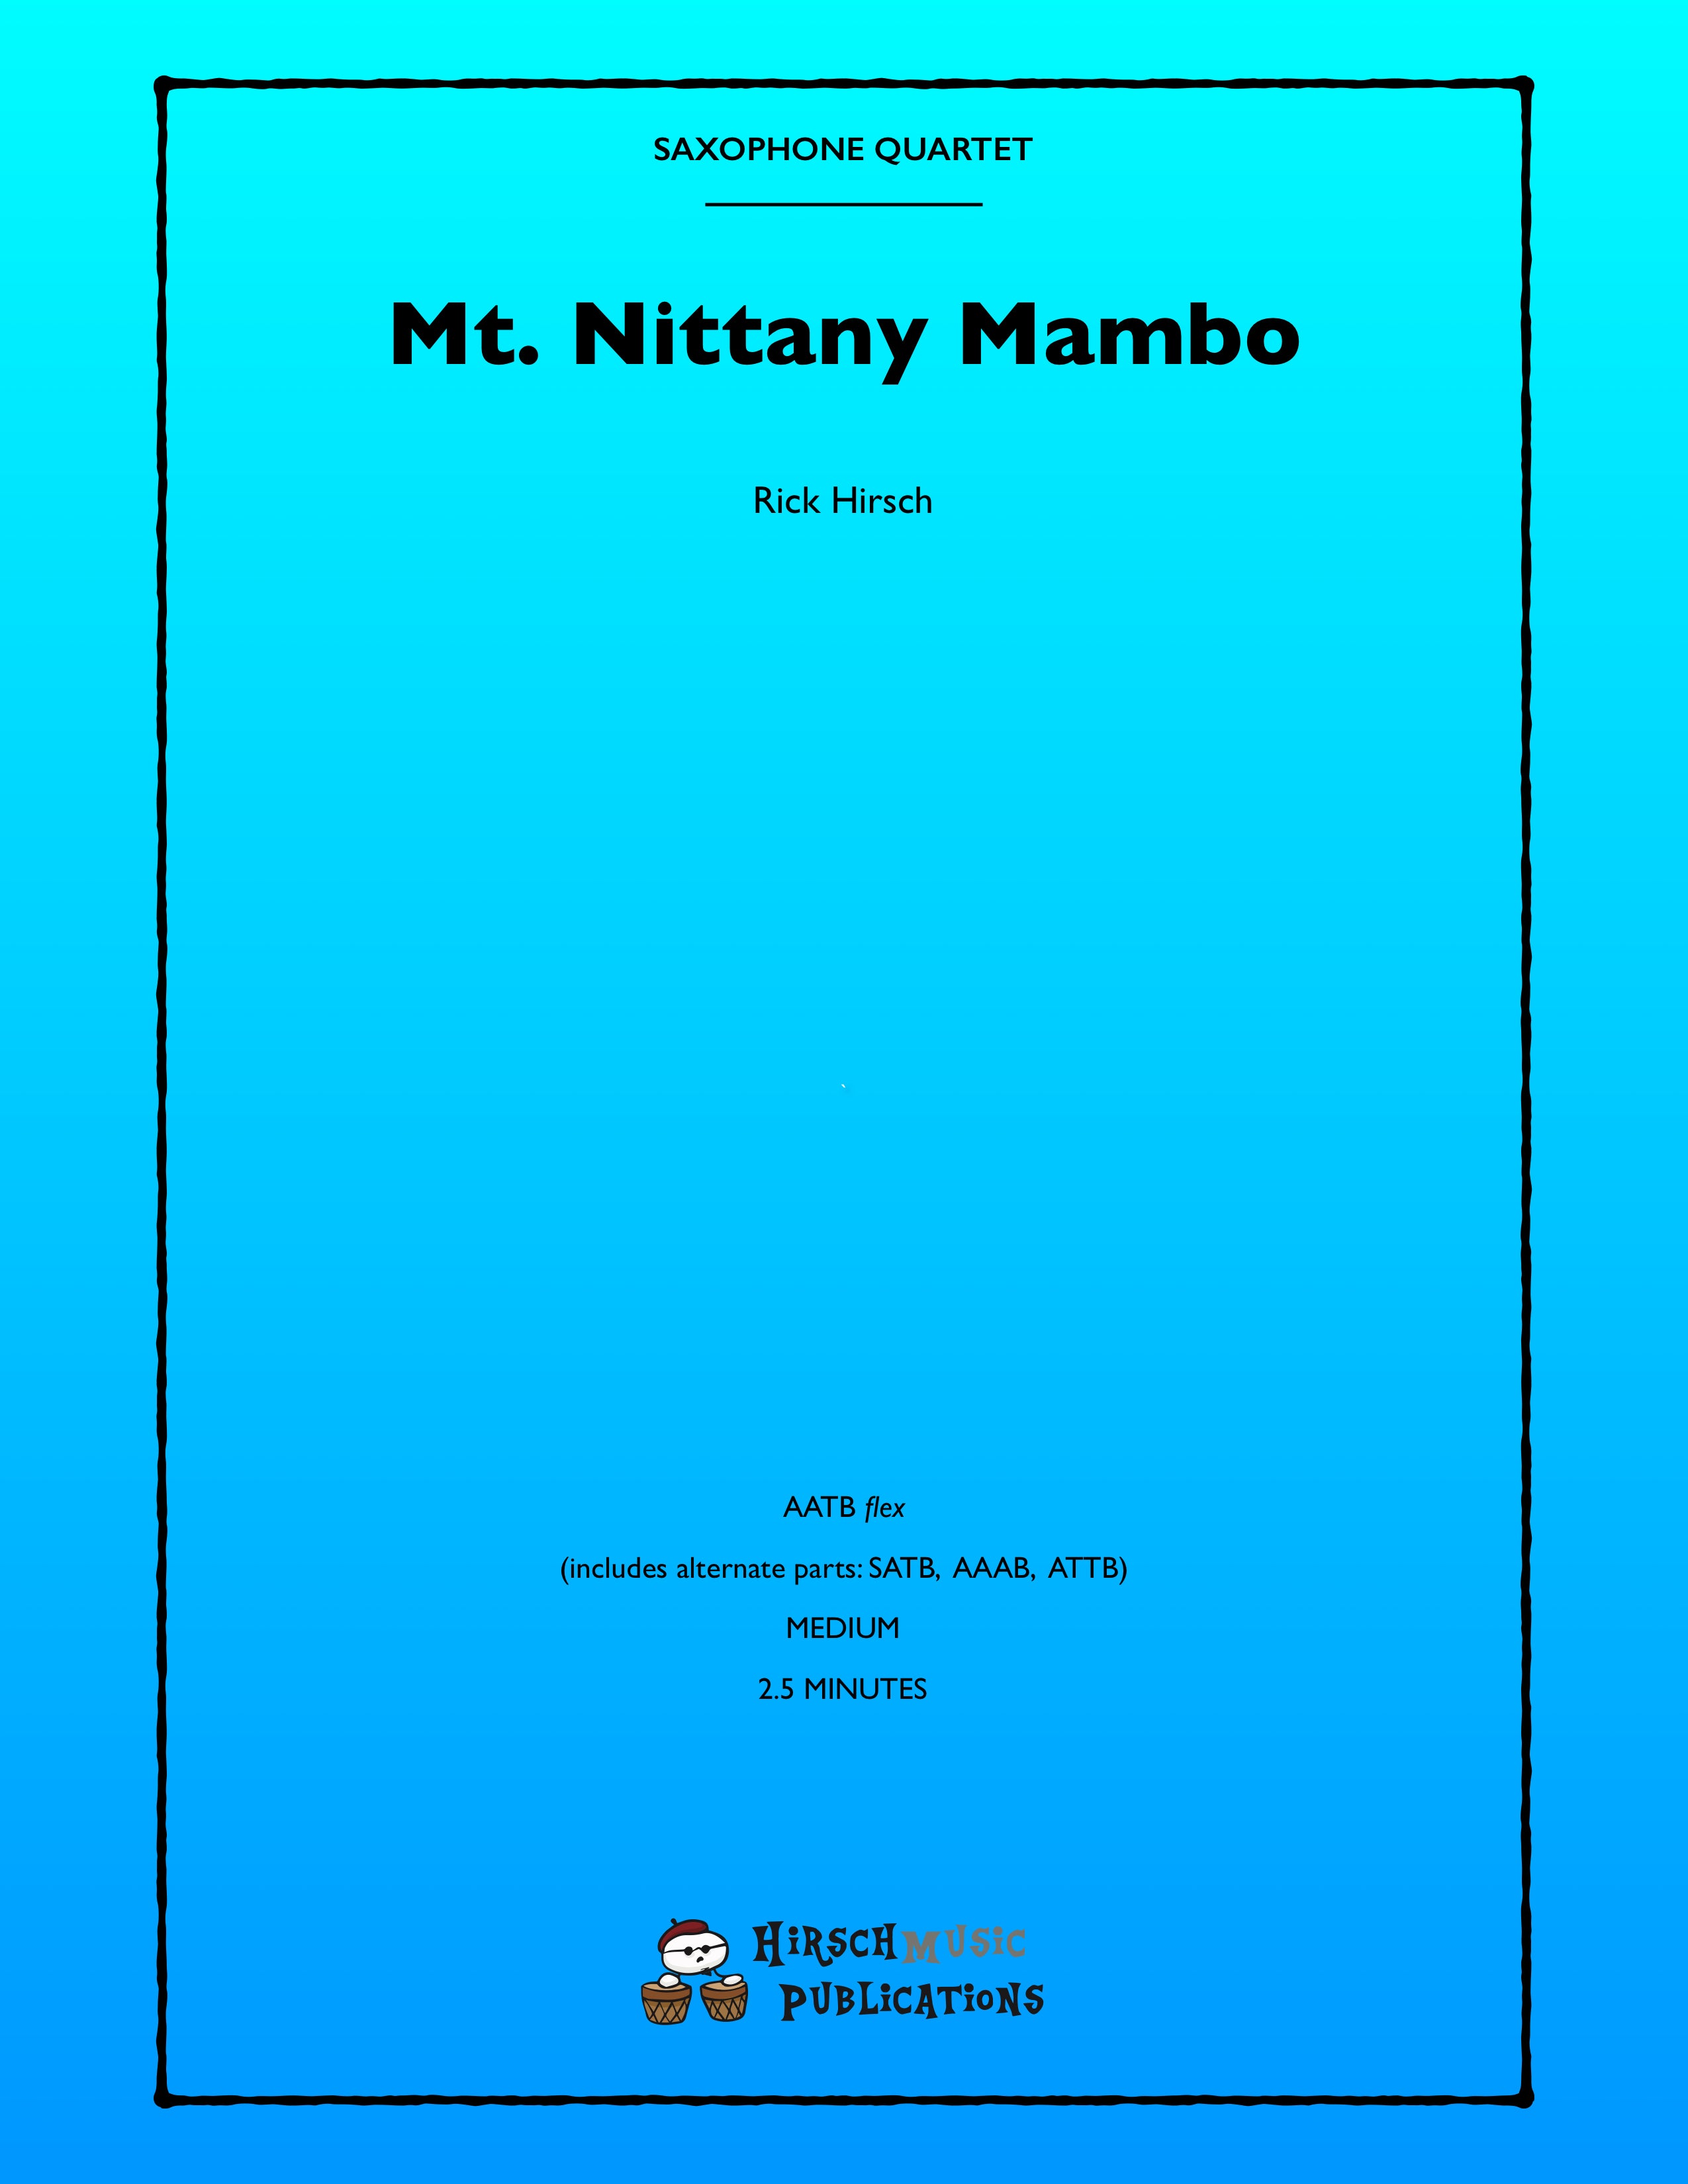 Mt. Nittany Mambo